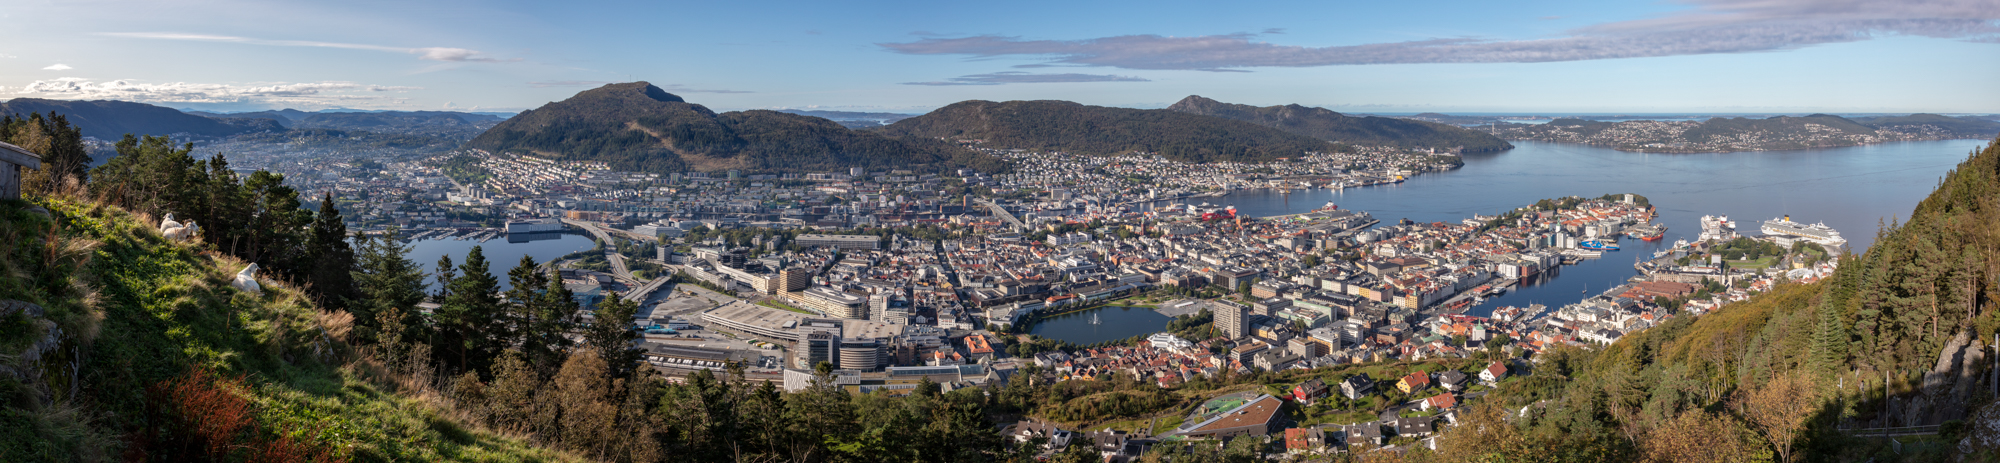 Panoramic view of Bergen from Mount Fløyen, Norway.